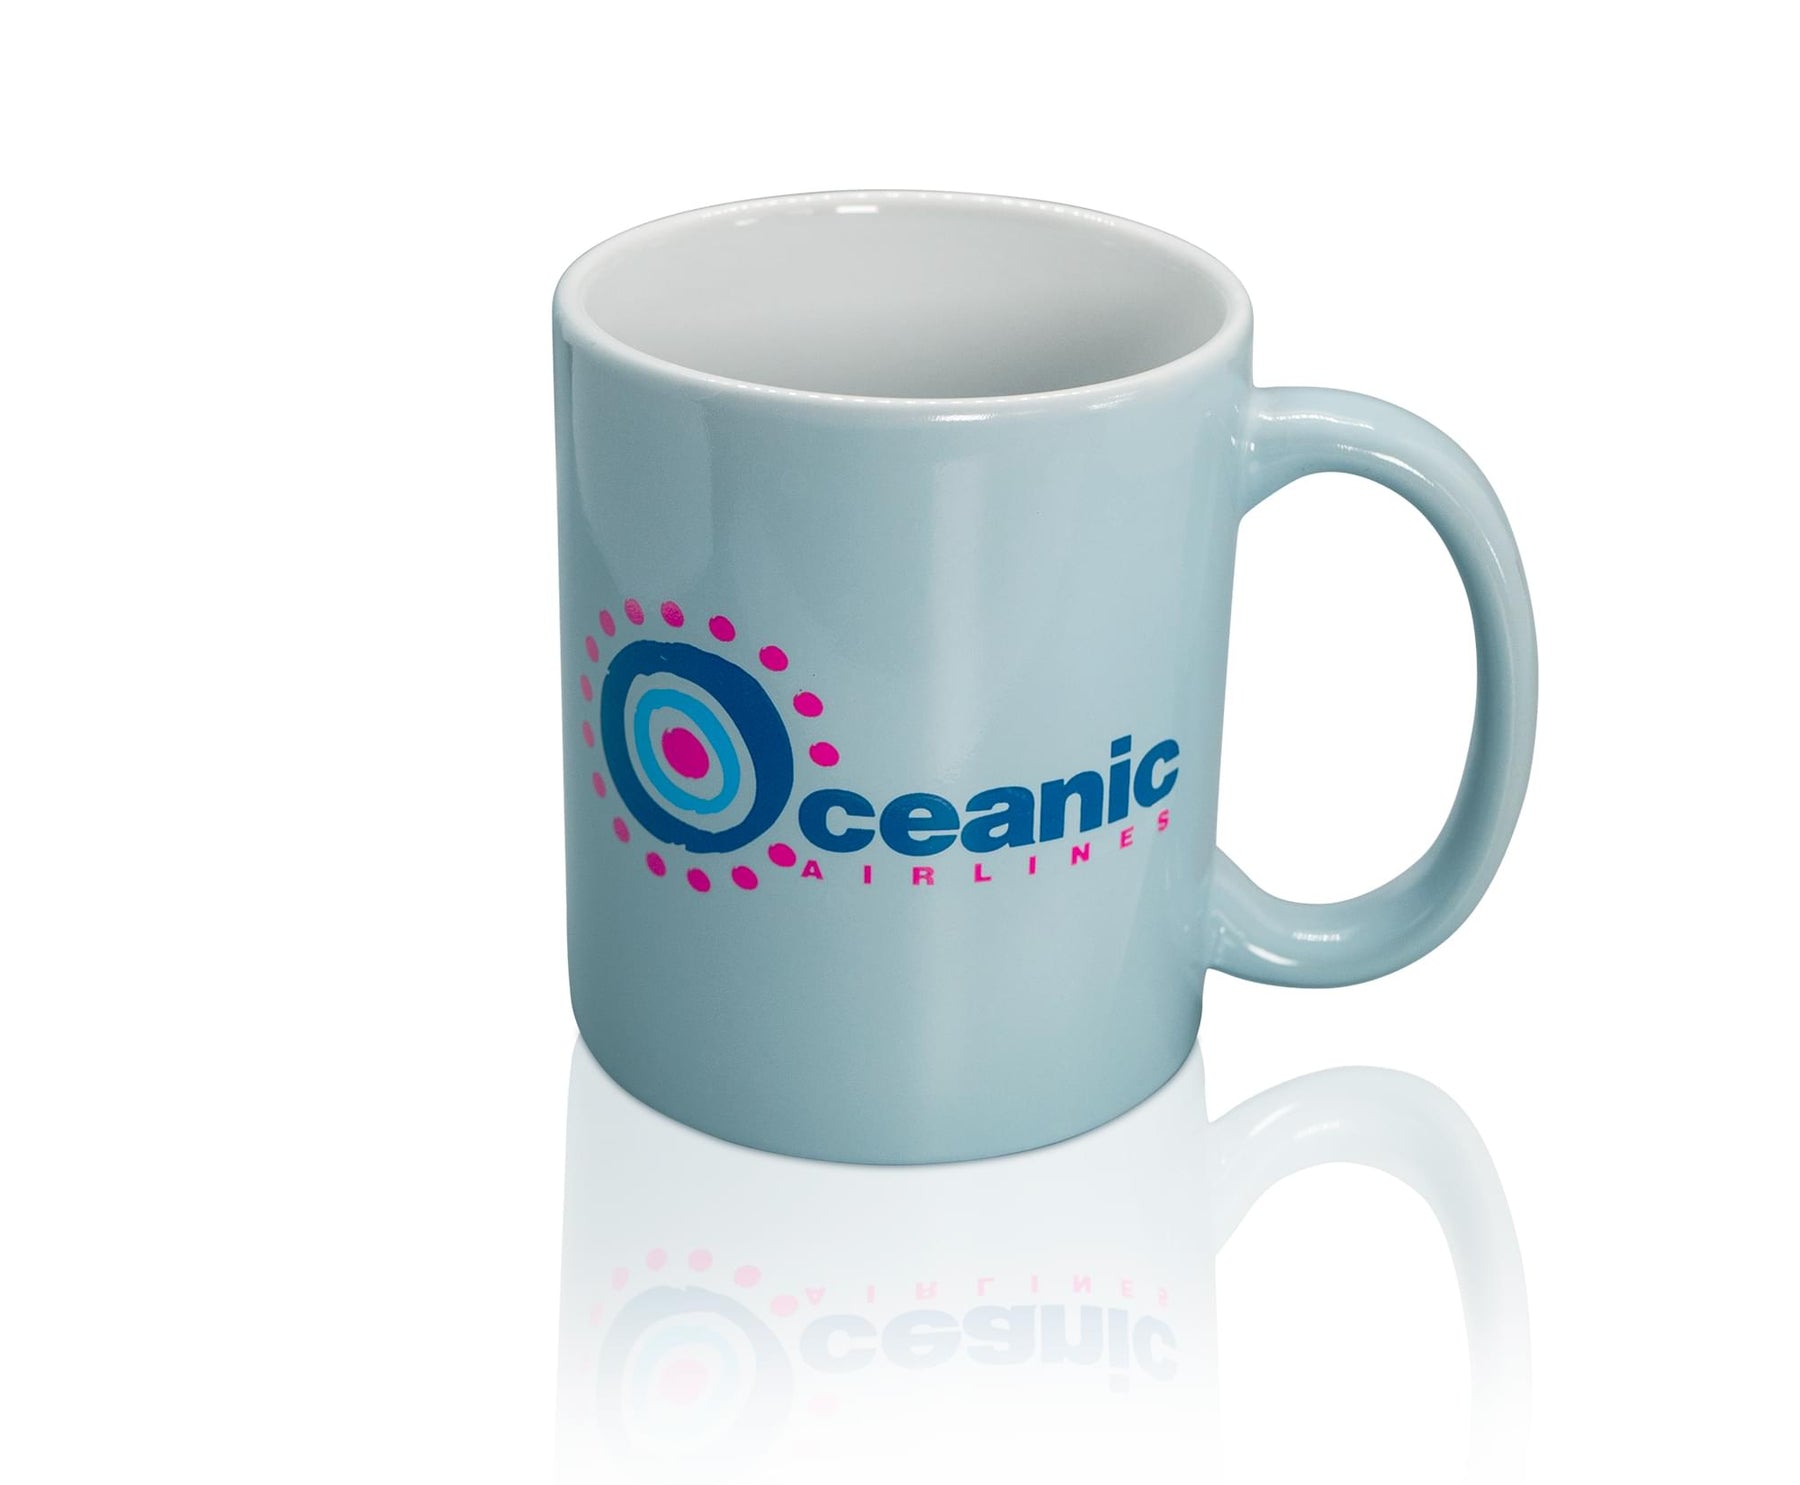 LOST Oceanic Airlines 12oz Ceramic Coffee Mug